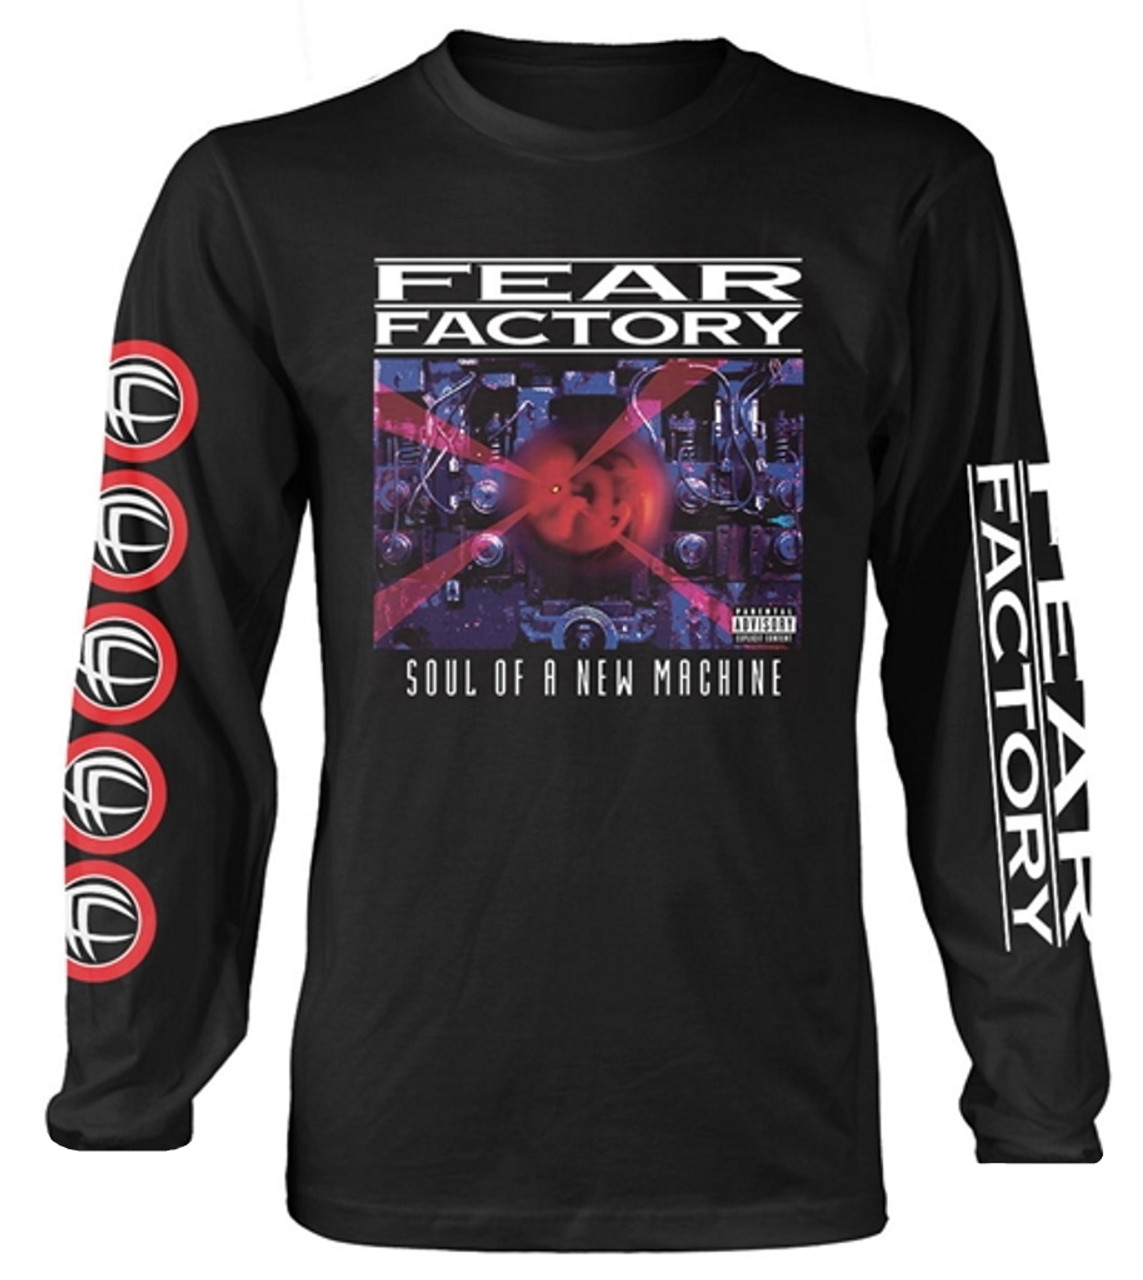 Fear Factory 'Soul Of A New Machine' (Black) Long Sleeve Shirt